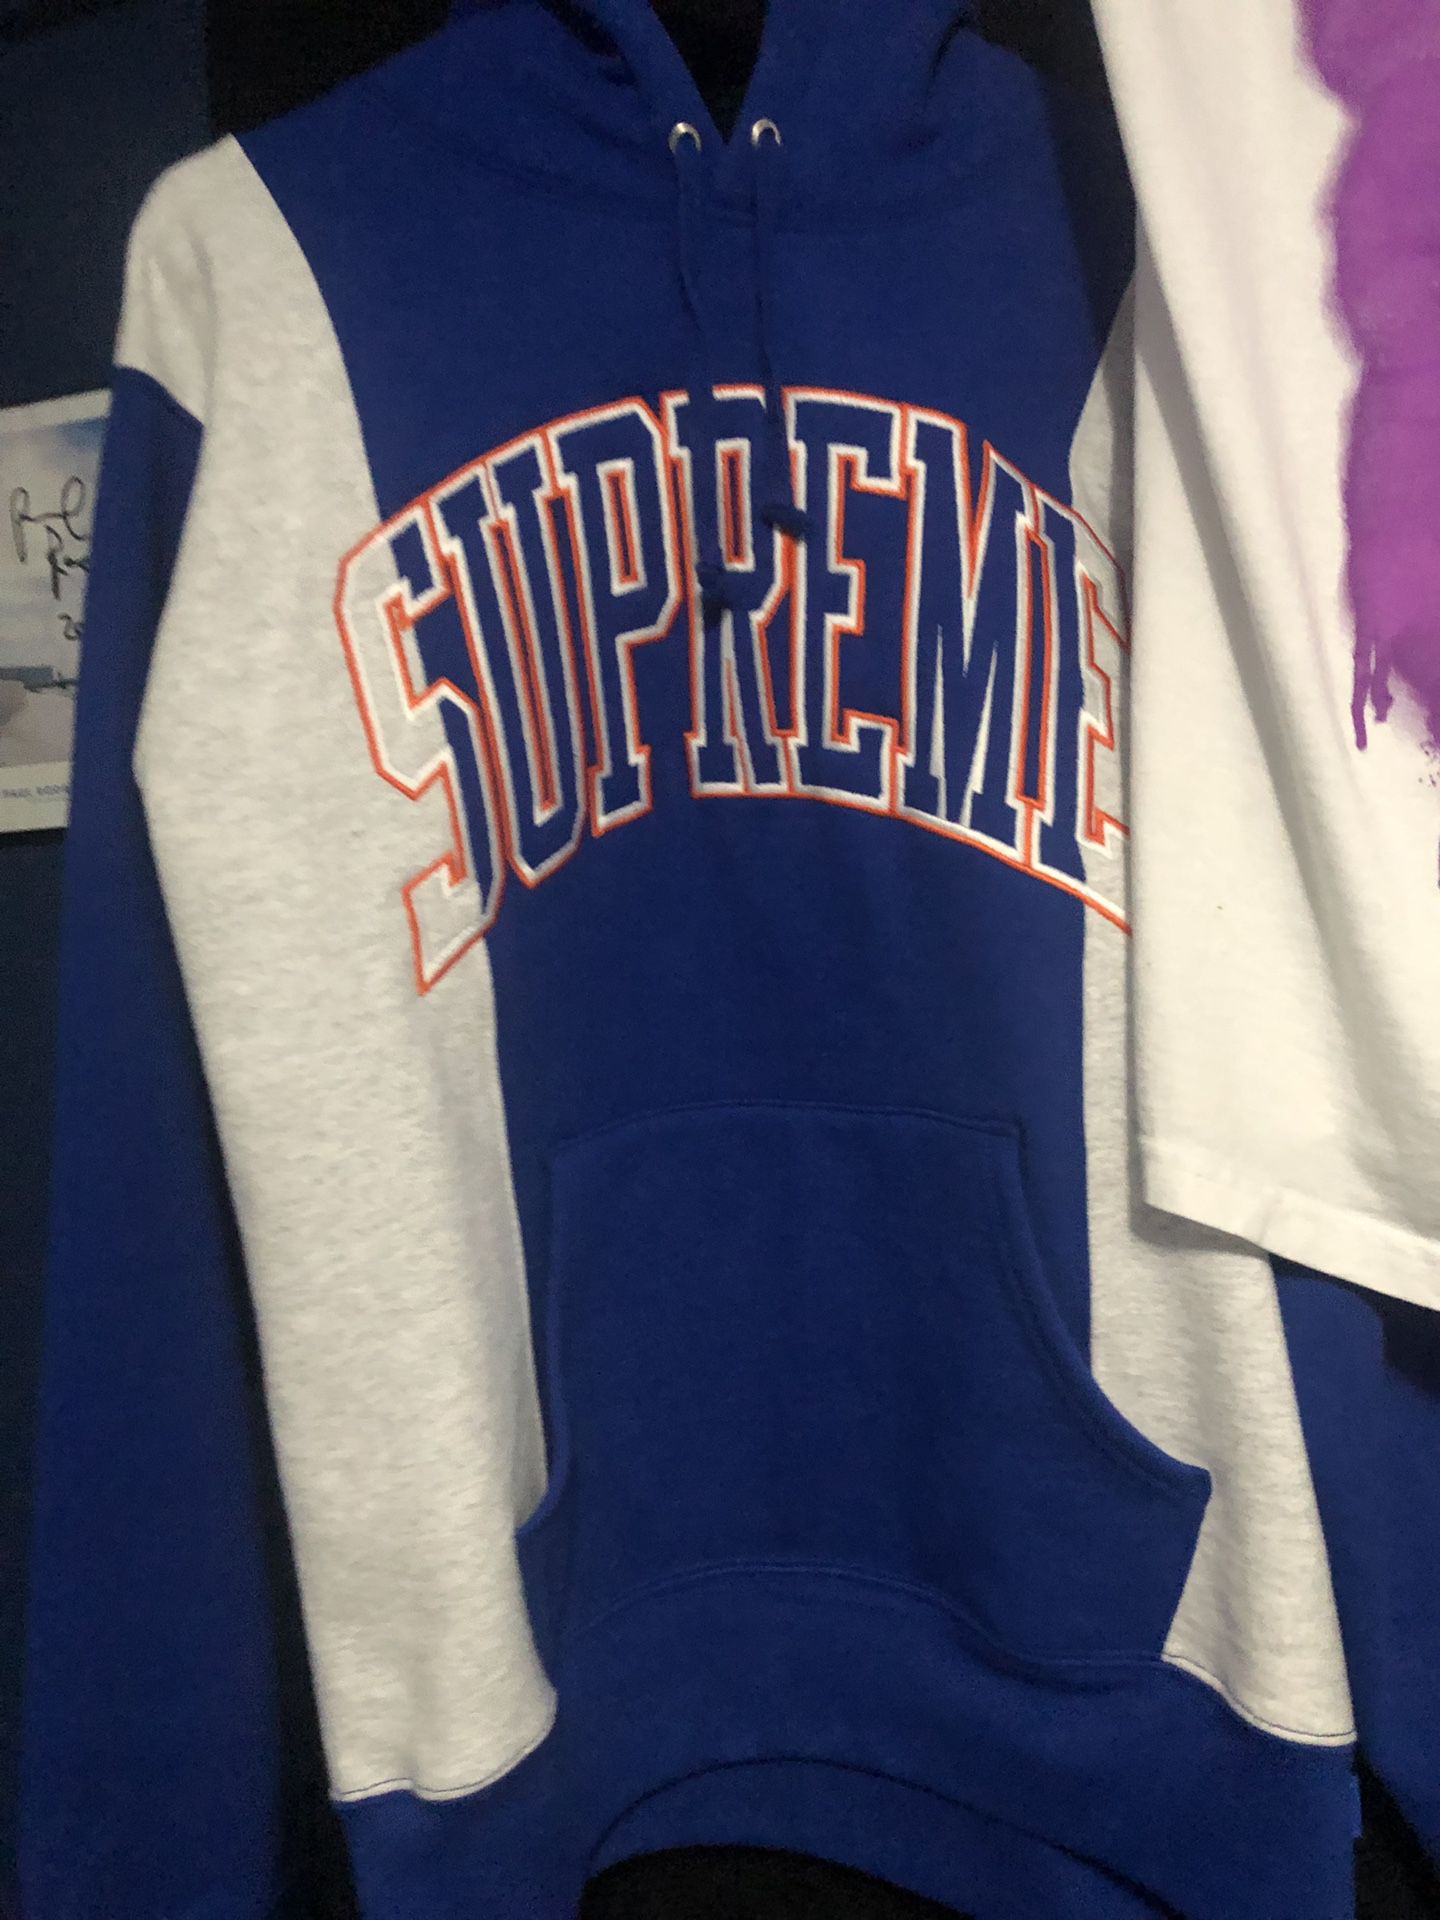 Supreme arc logo hoodie